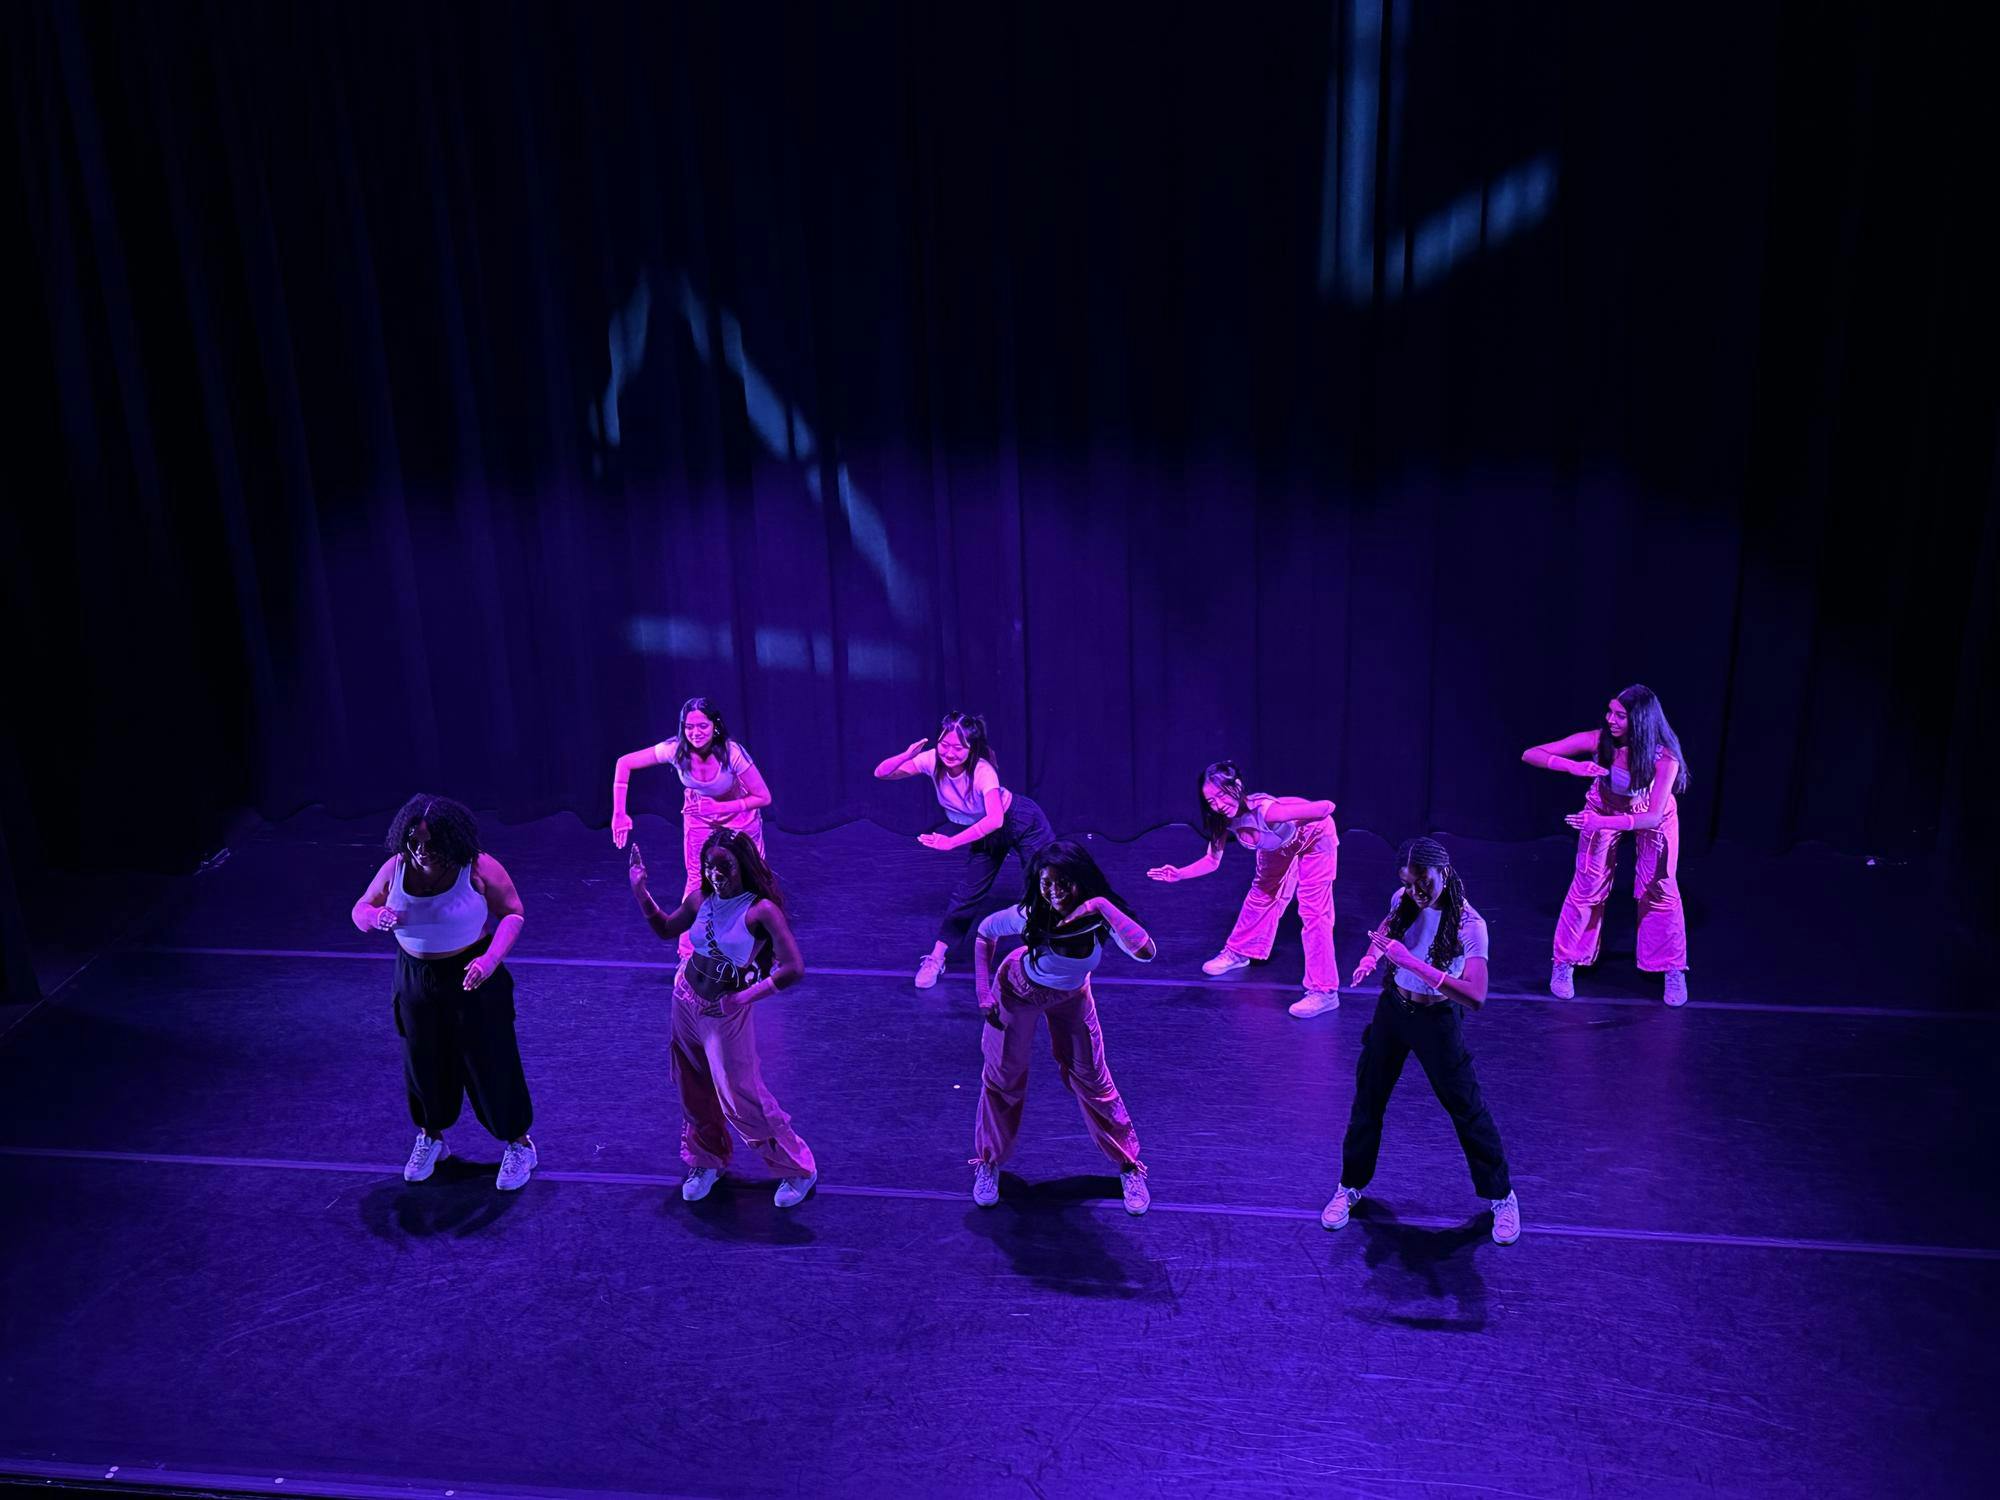 Dancers of the Black Arts Company dance to "Barbie Girl" by Aqua, Ice Spice, and Nicki Minaj in Frist Theater to purple lighting.